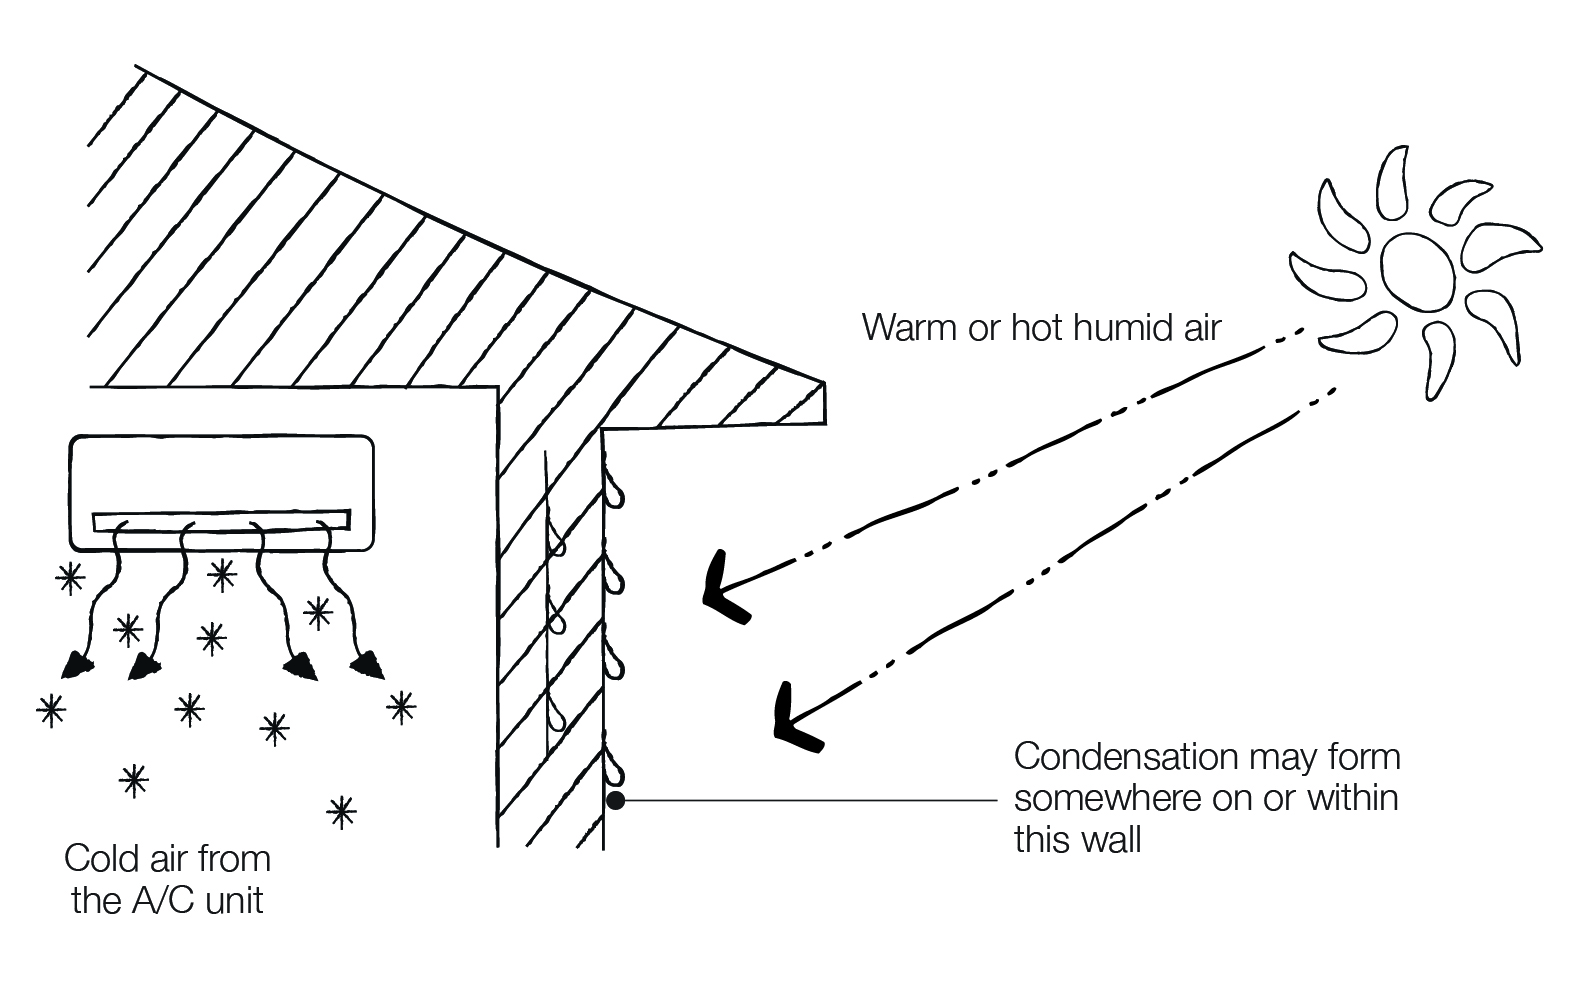 Condensation - Energy loss